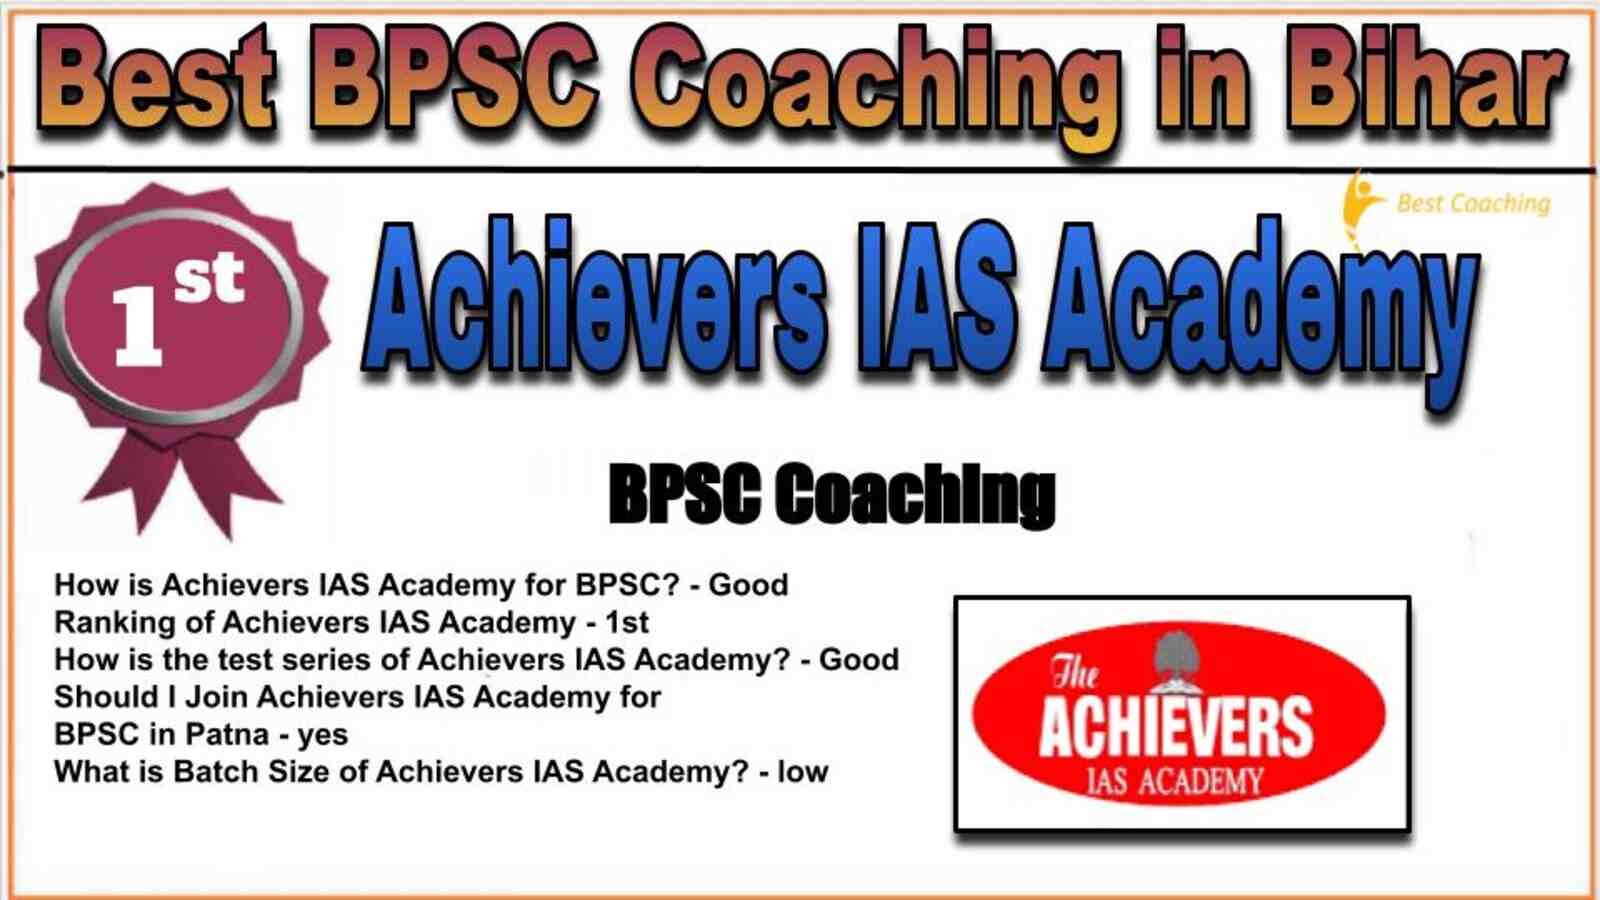 Rank 1 Best BPSC Coaching Institute in Bihar